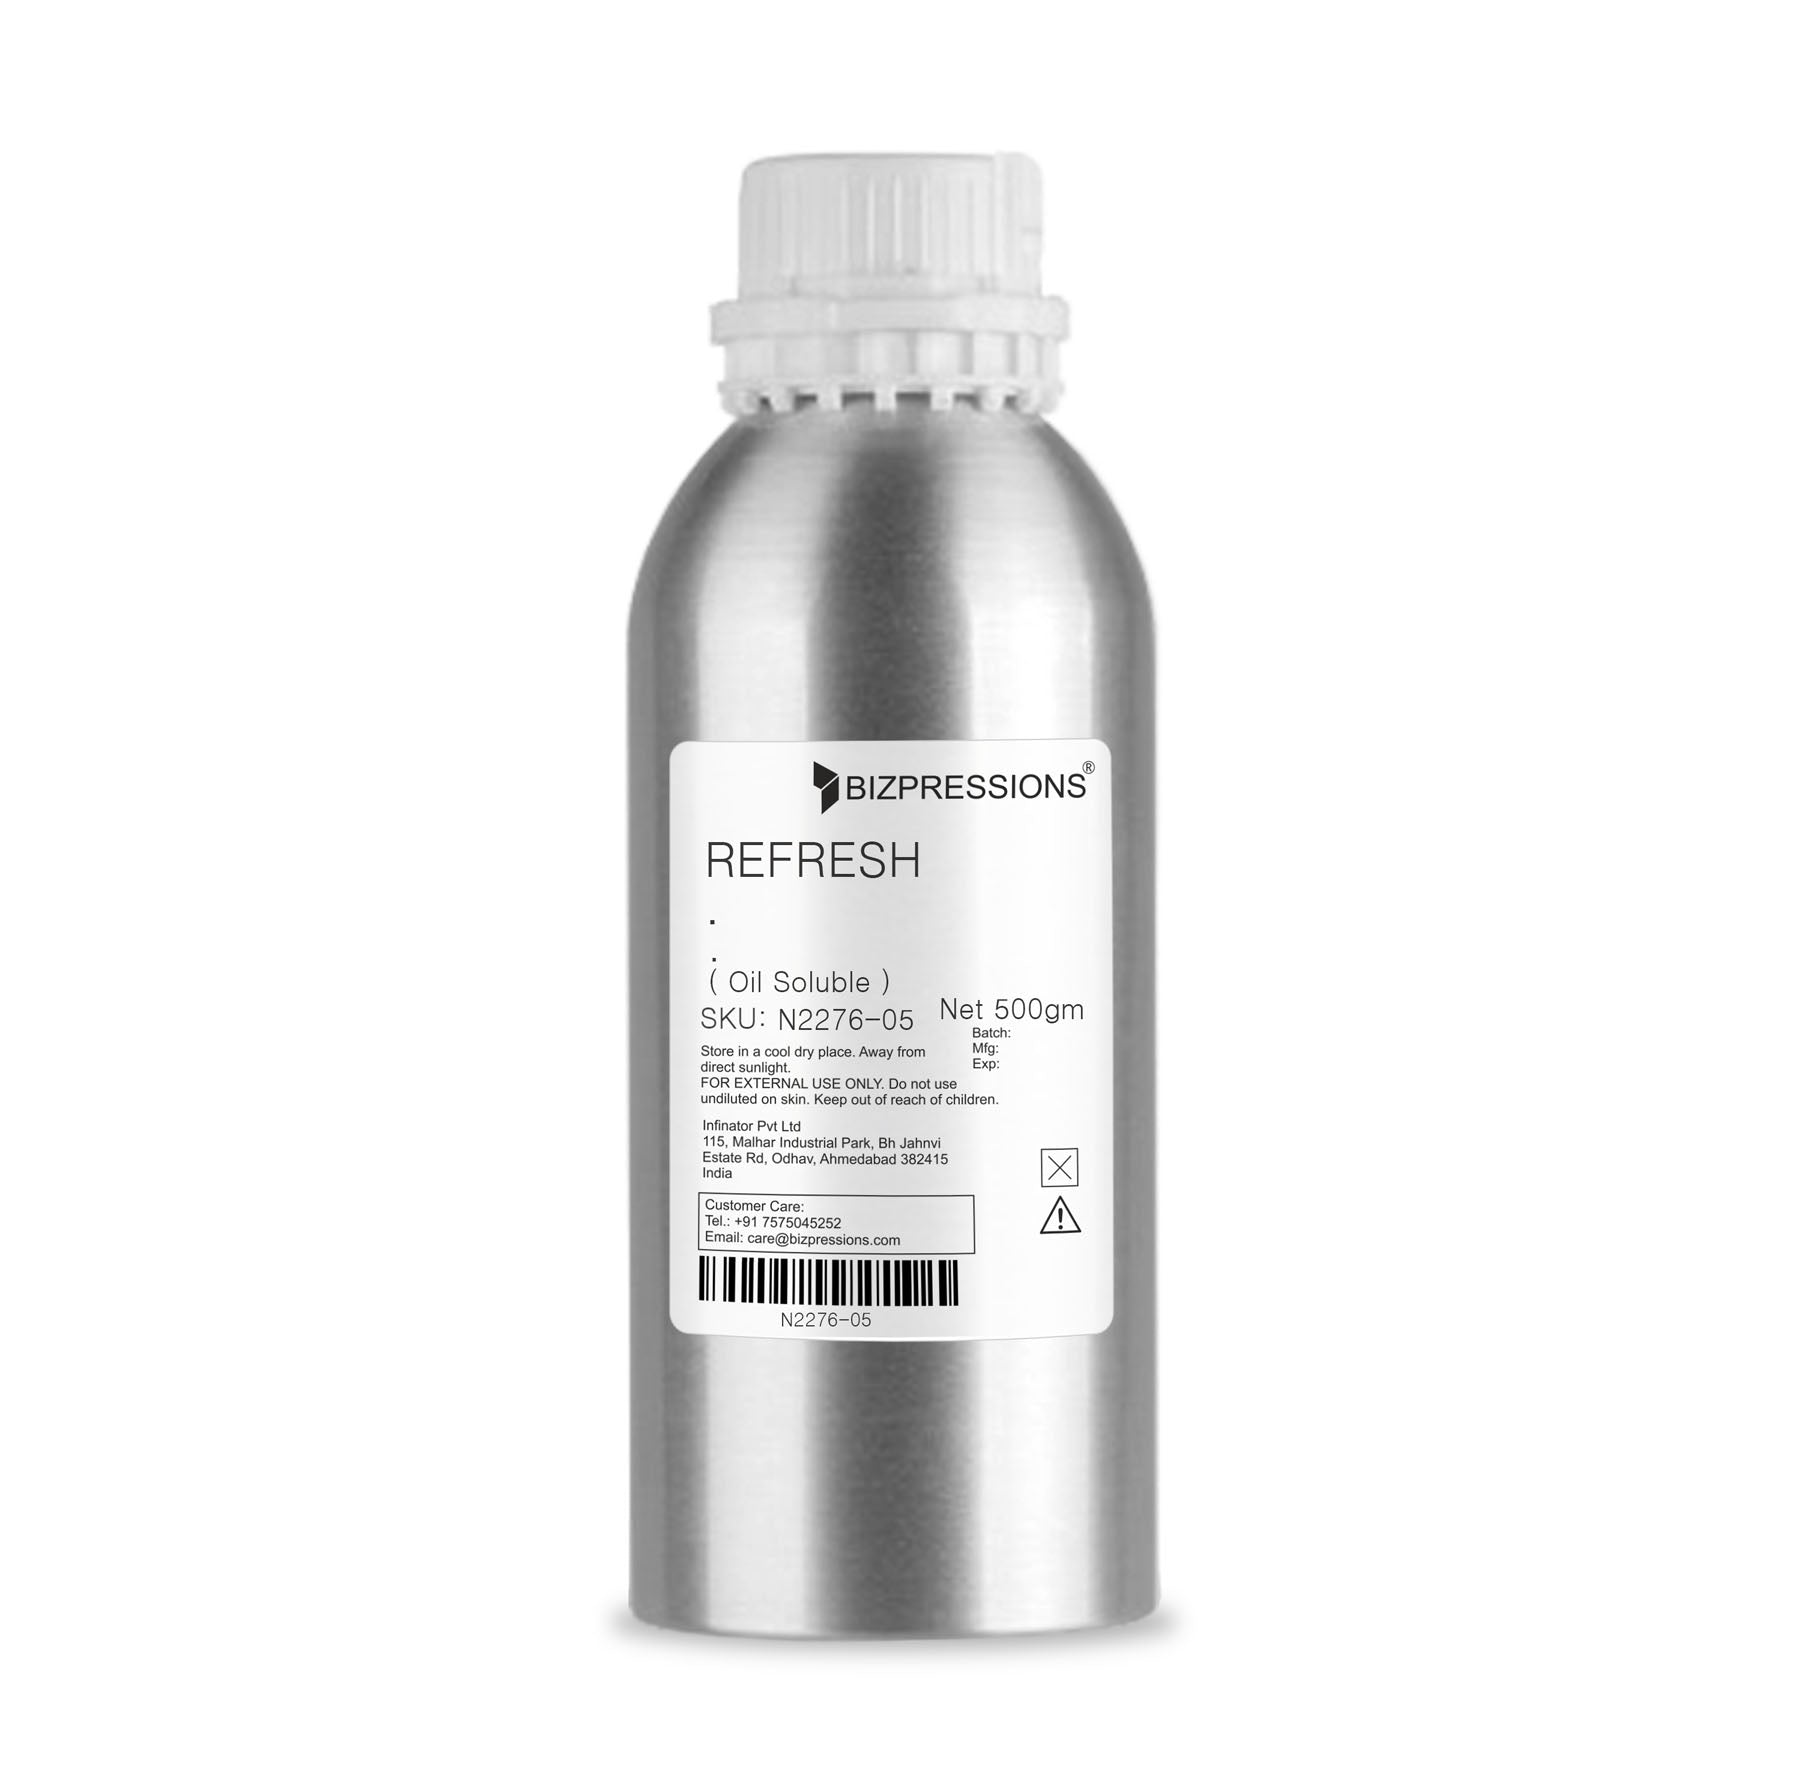 REFRESH - Fragrance ( Oil Soluble ) - 500 gm